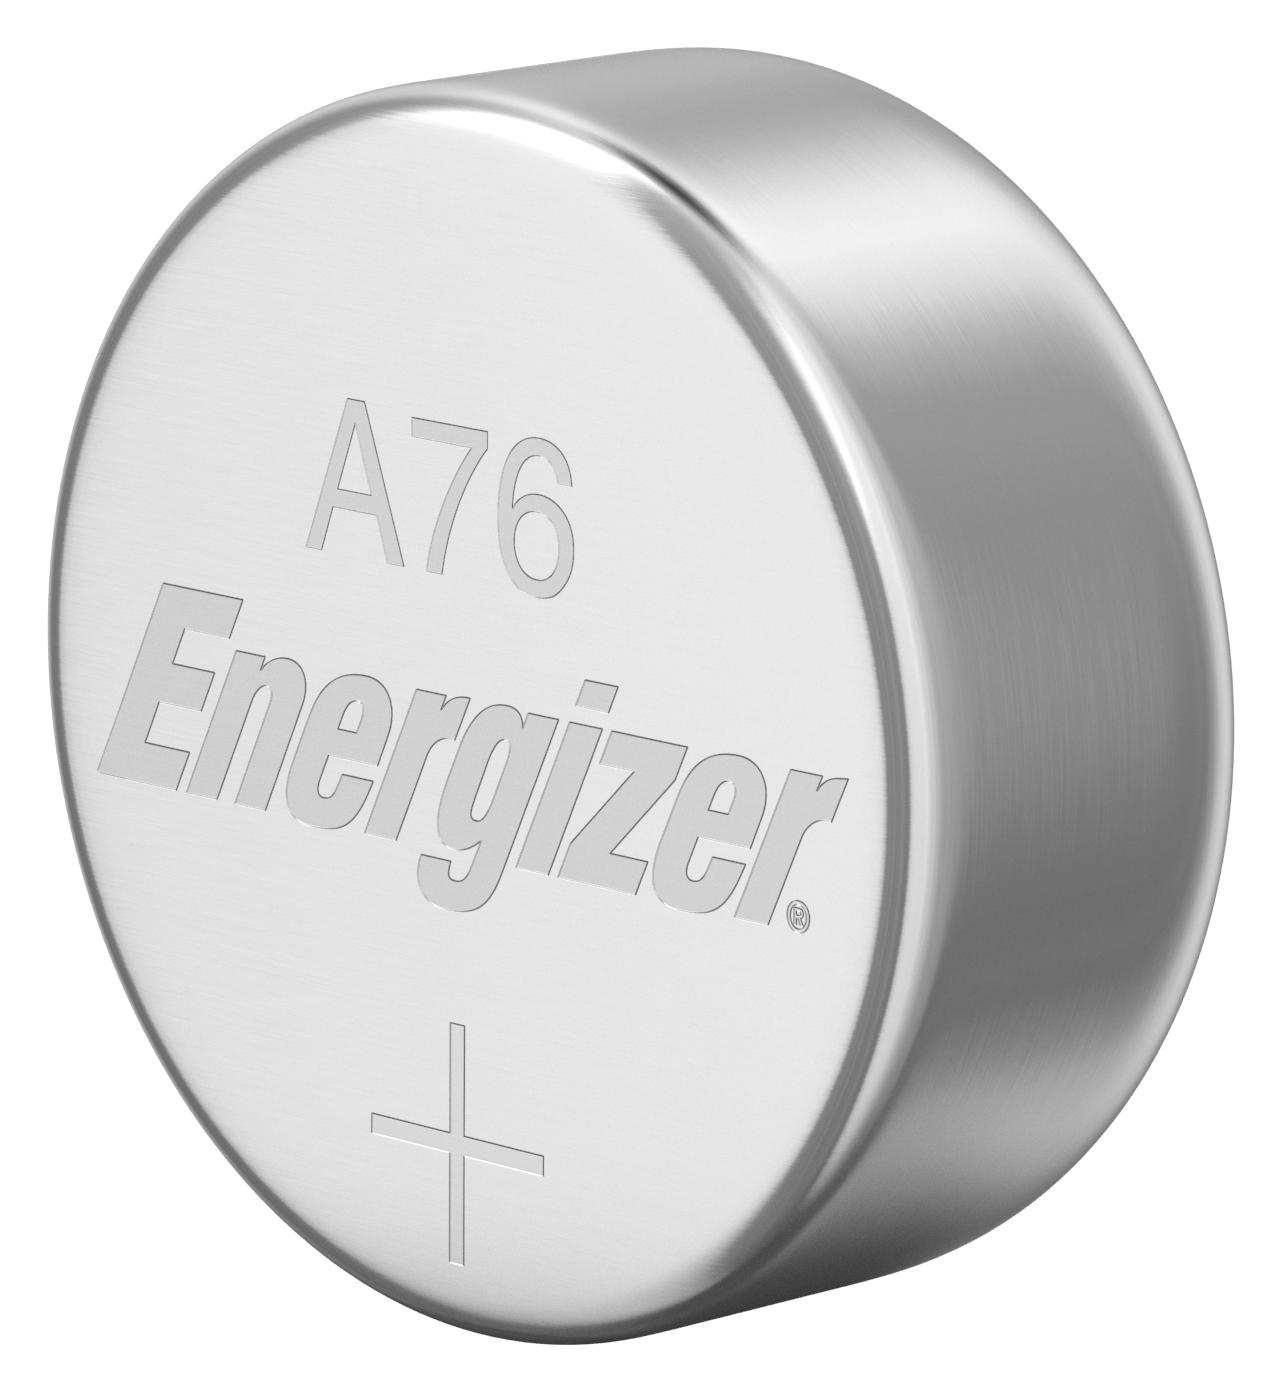 Energizer 7638900411164 Battery, A76, 1.5V, 175Mah